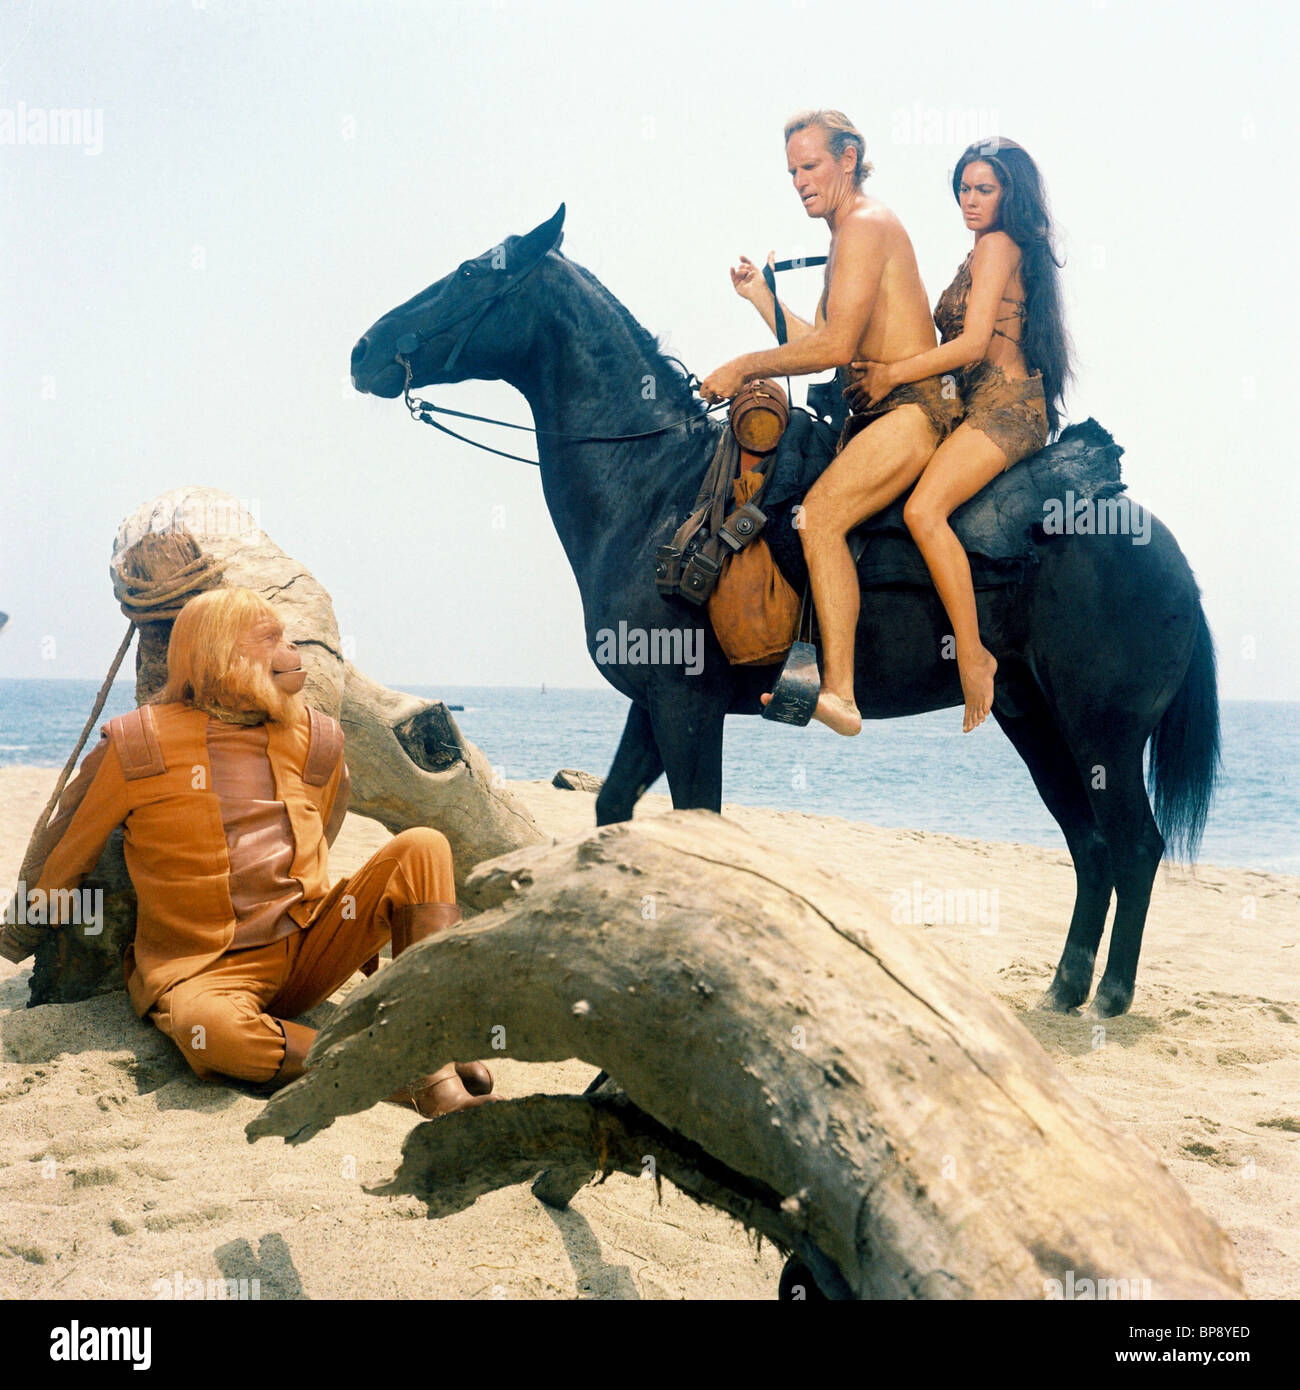 maurice-evans-charlton-heston-linda-harrison-planet-of-the-apes-1968-bp8yed.jpg